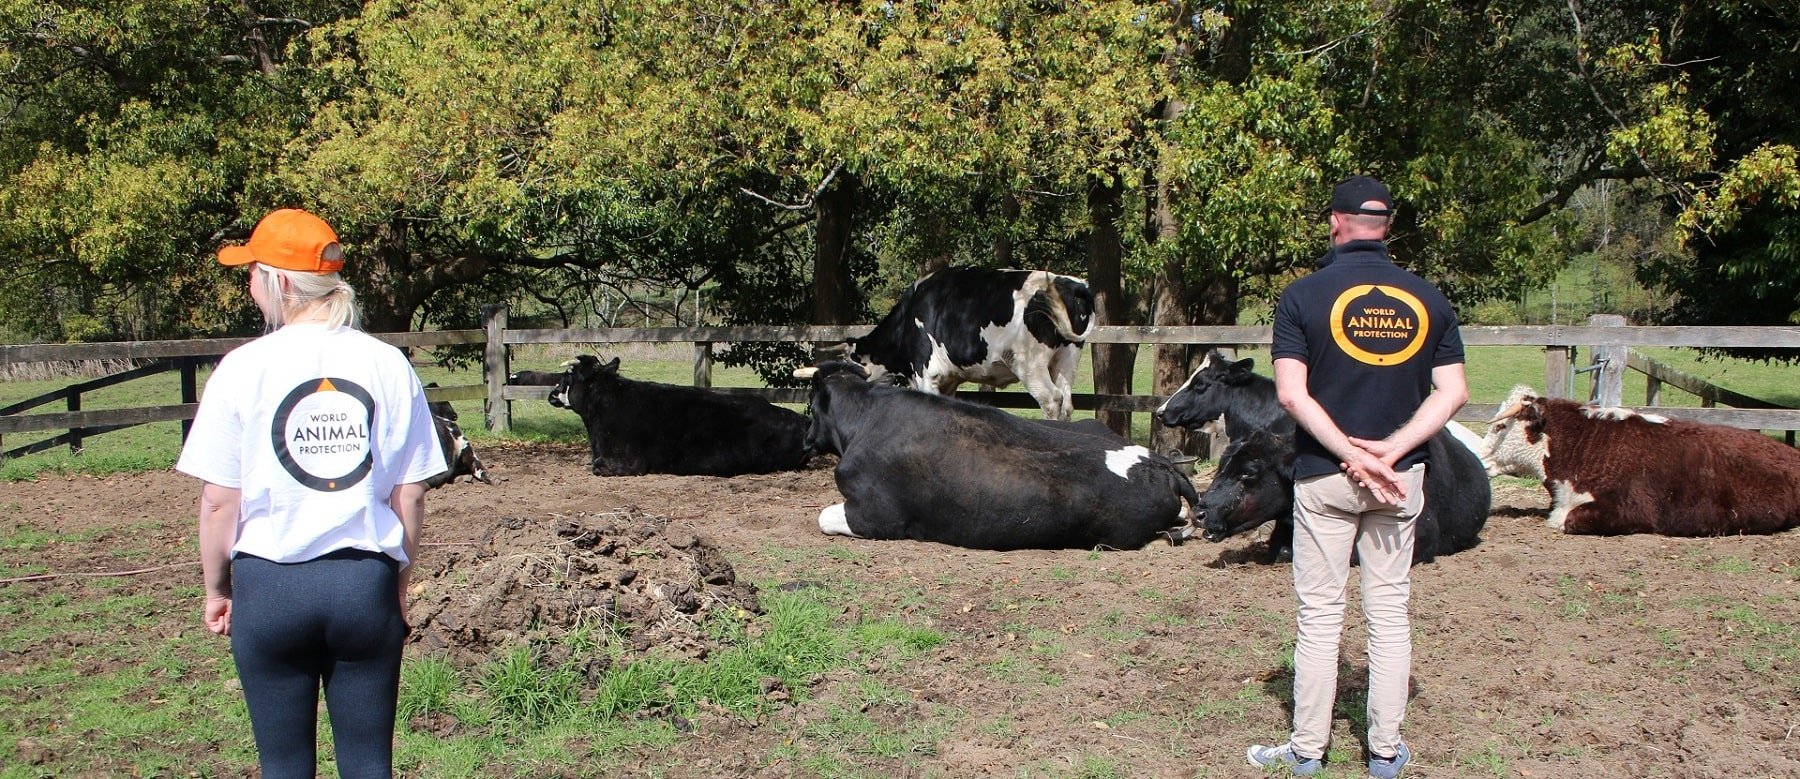 Staff with cows, Moo to Ewe sanctuary, Australia